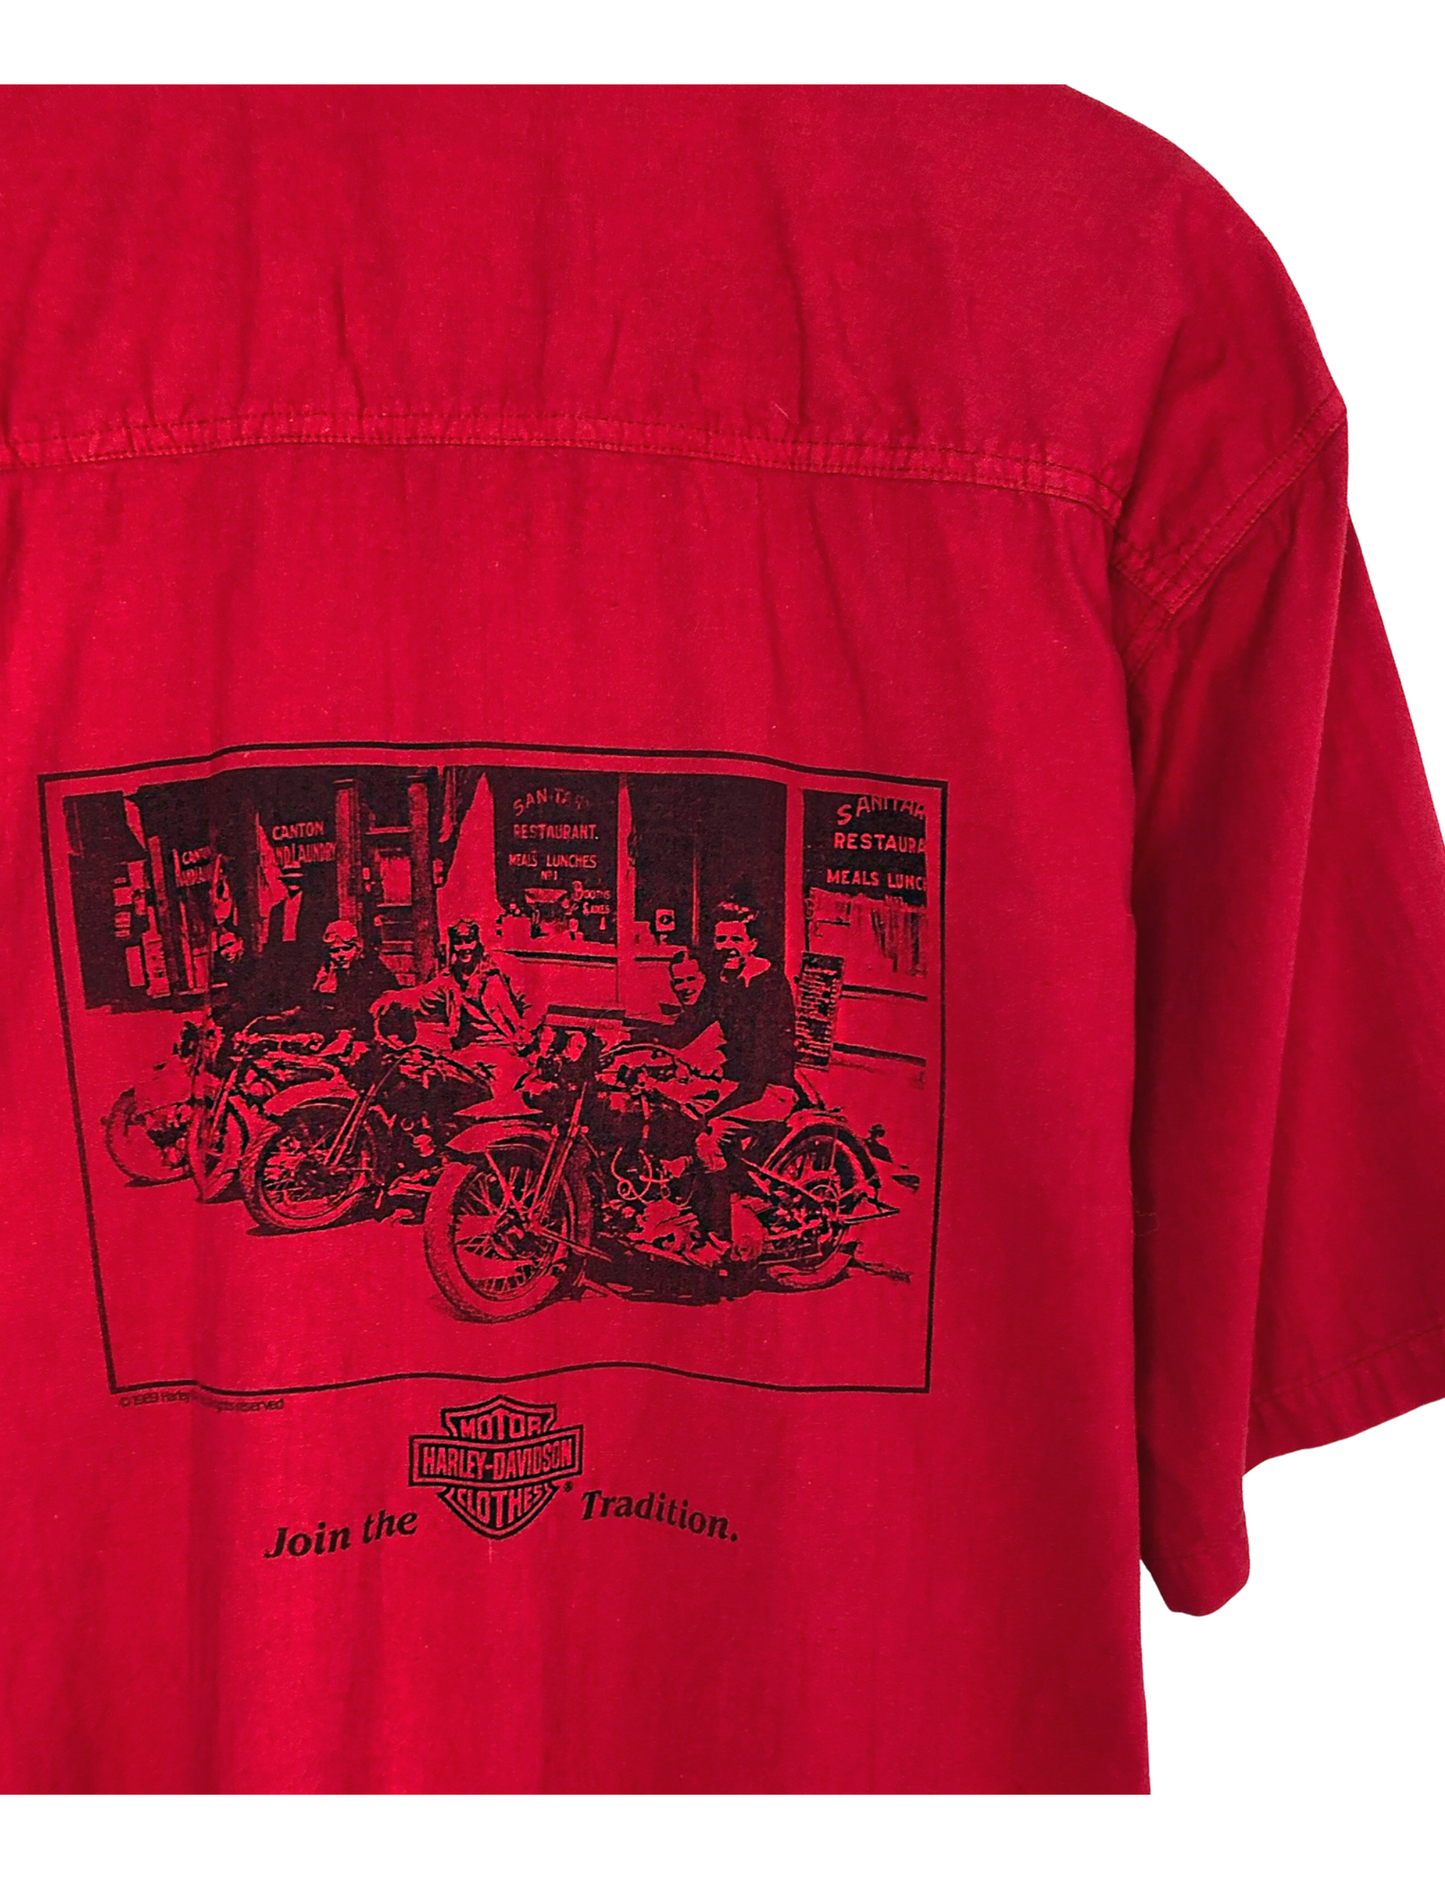 ‘90 HARLEY Davidson Motorcycles Biker Daytona ‘Join the Tradition’ 100% Cotton Short Sleeve Buttonup Size Medium/Large